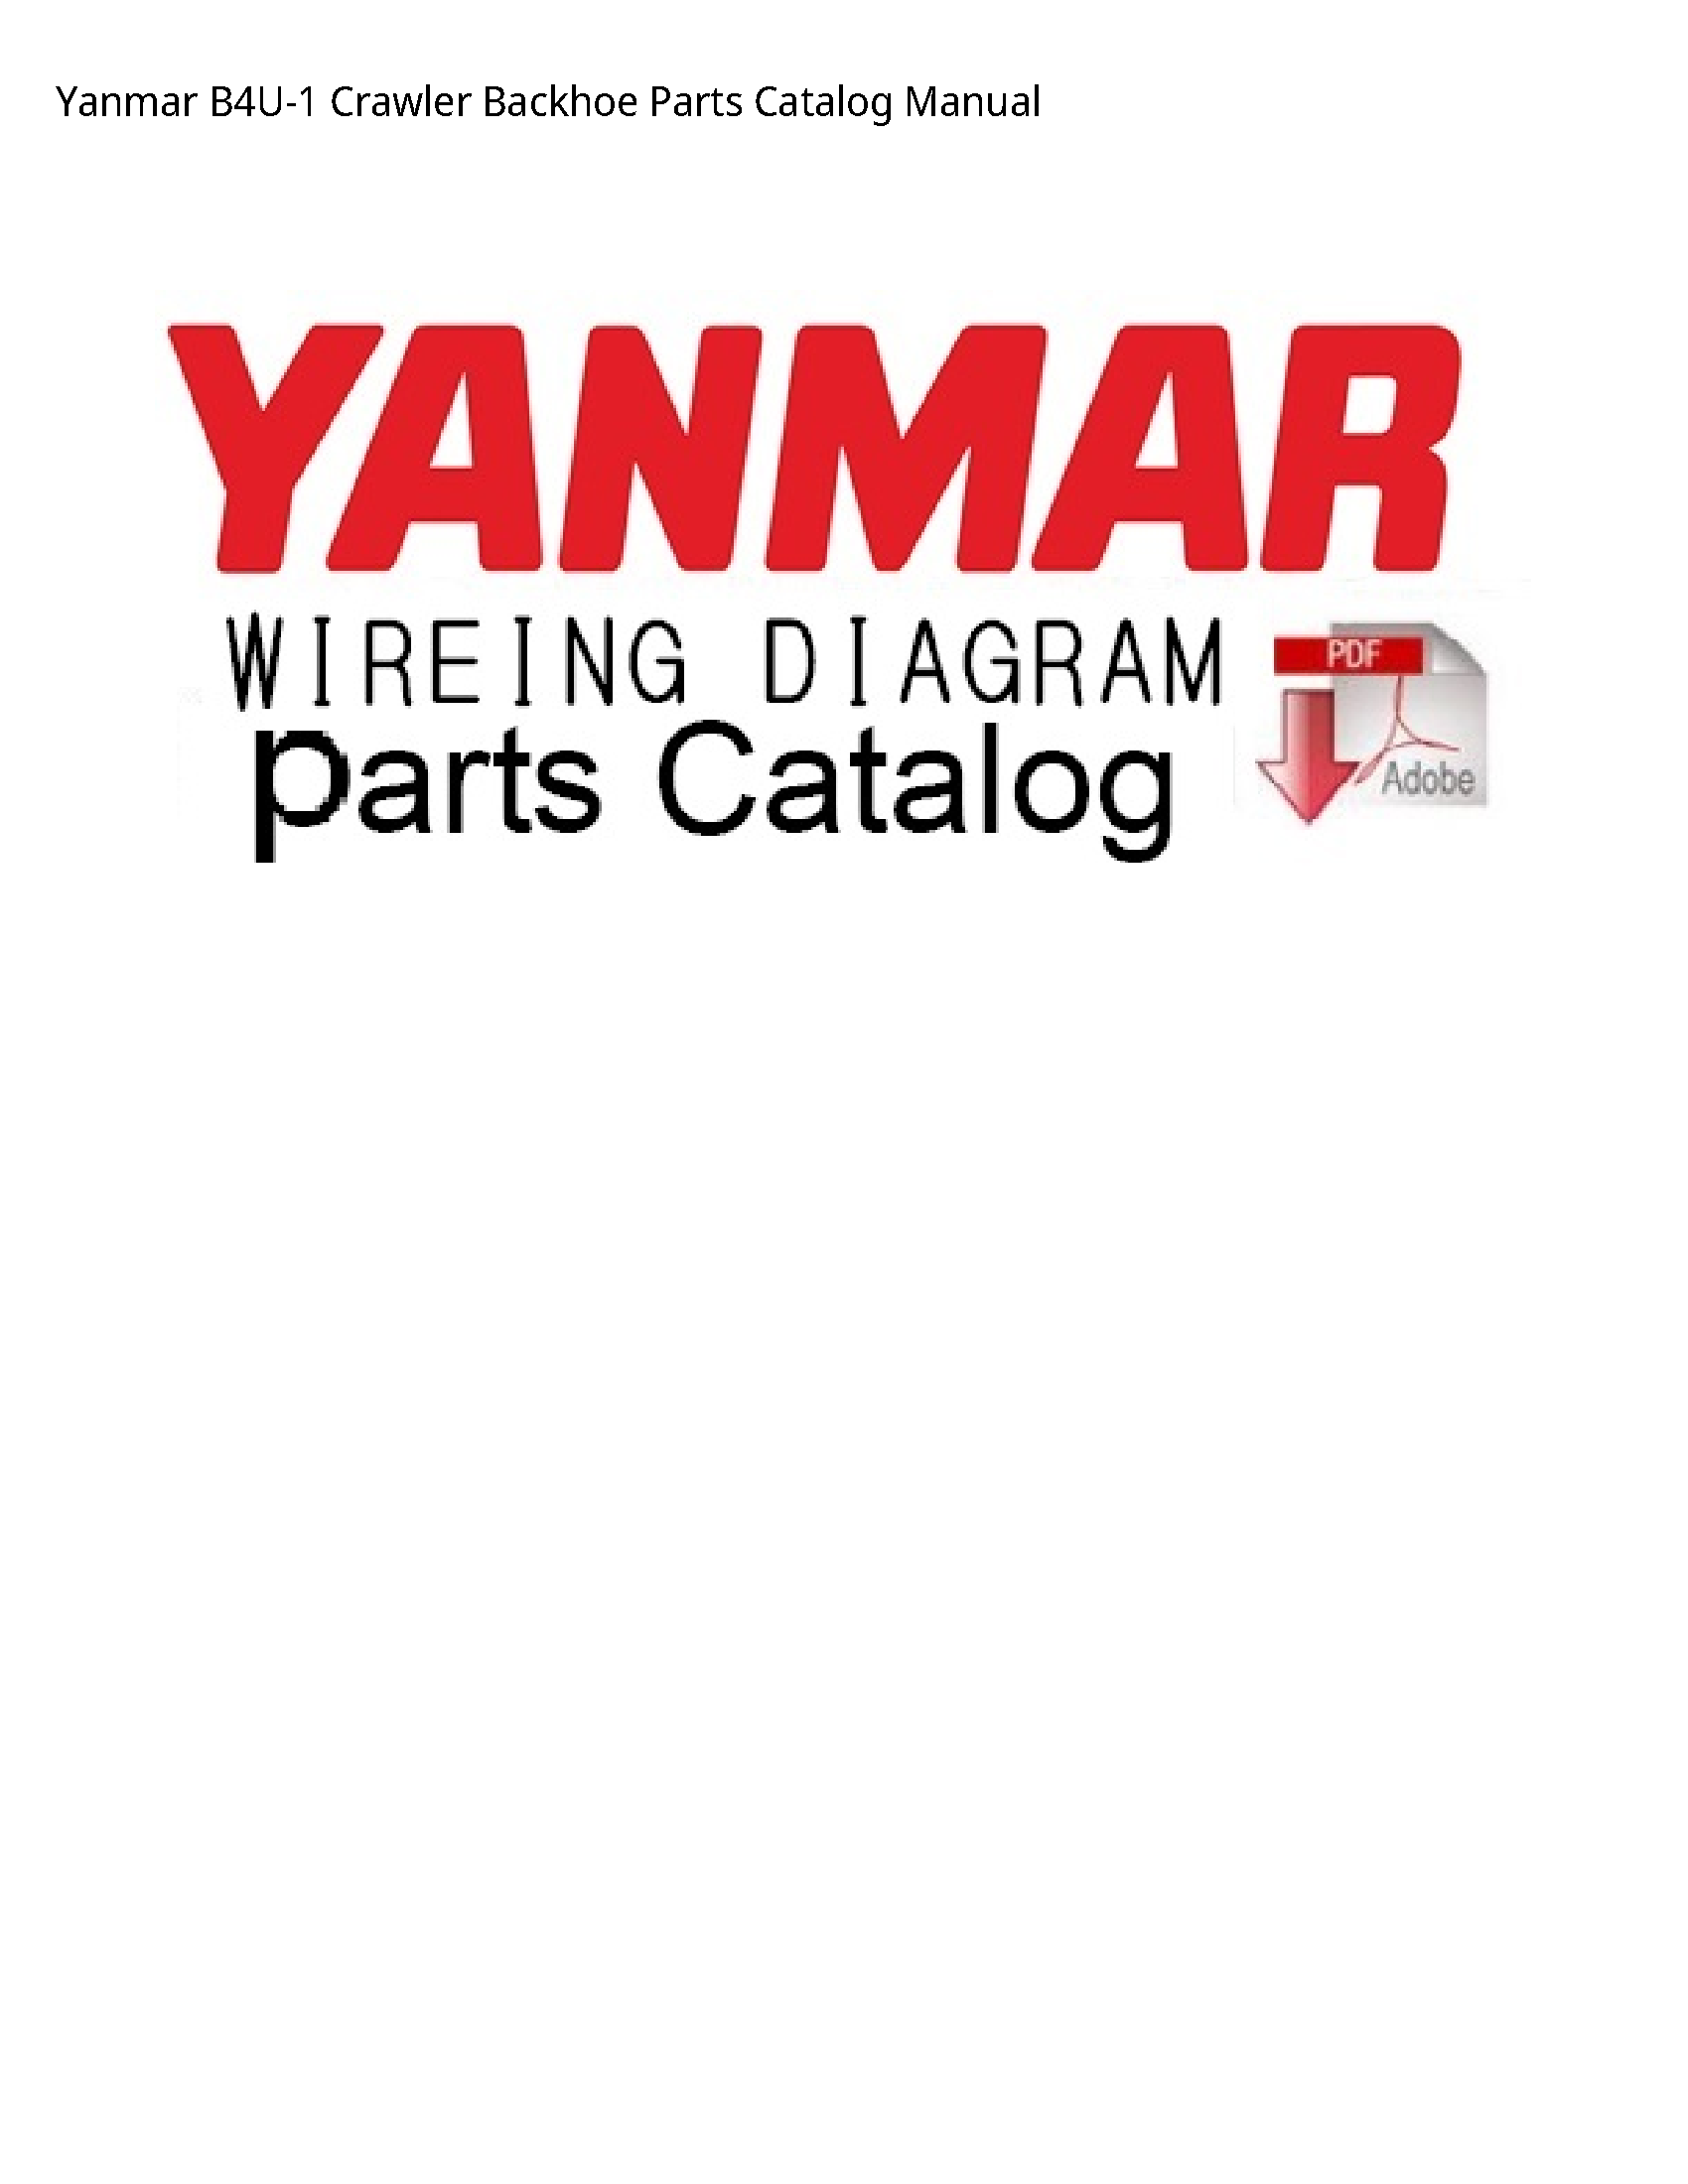 Yanmar B4U-1 Crawler Backhoe Parts Catalog manual